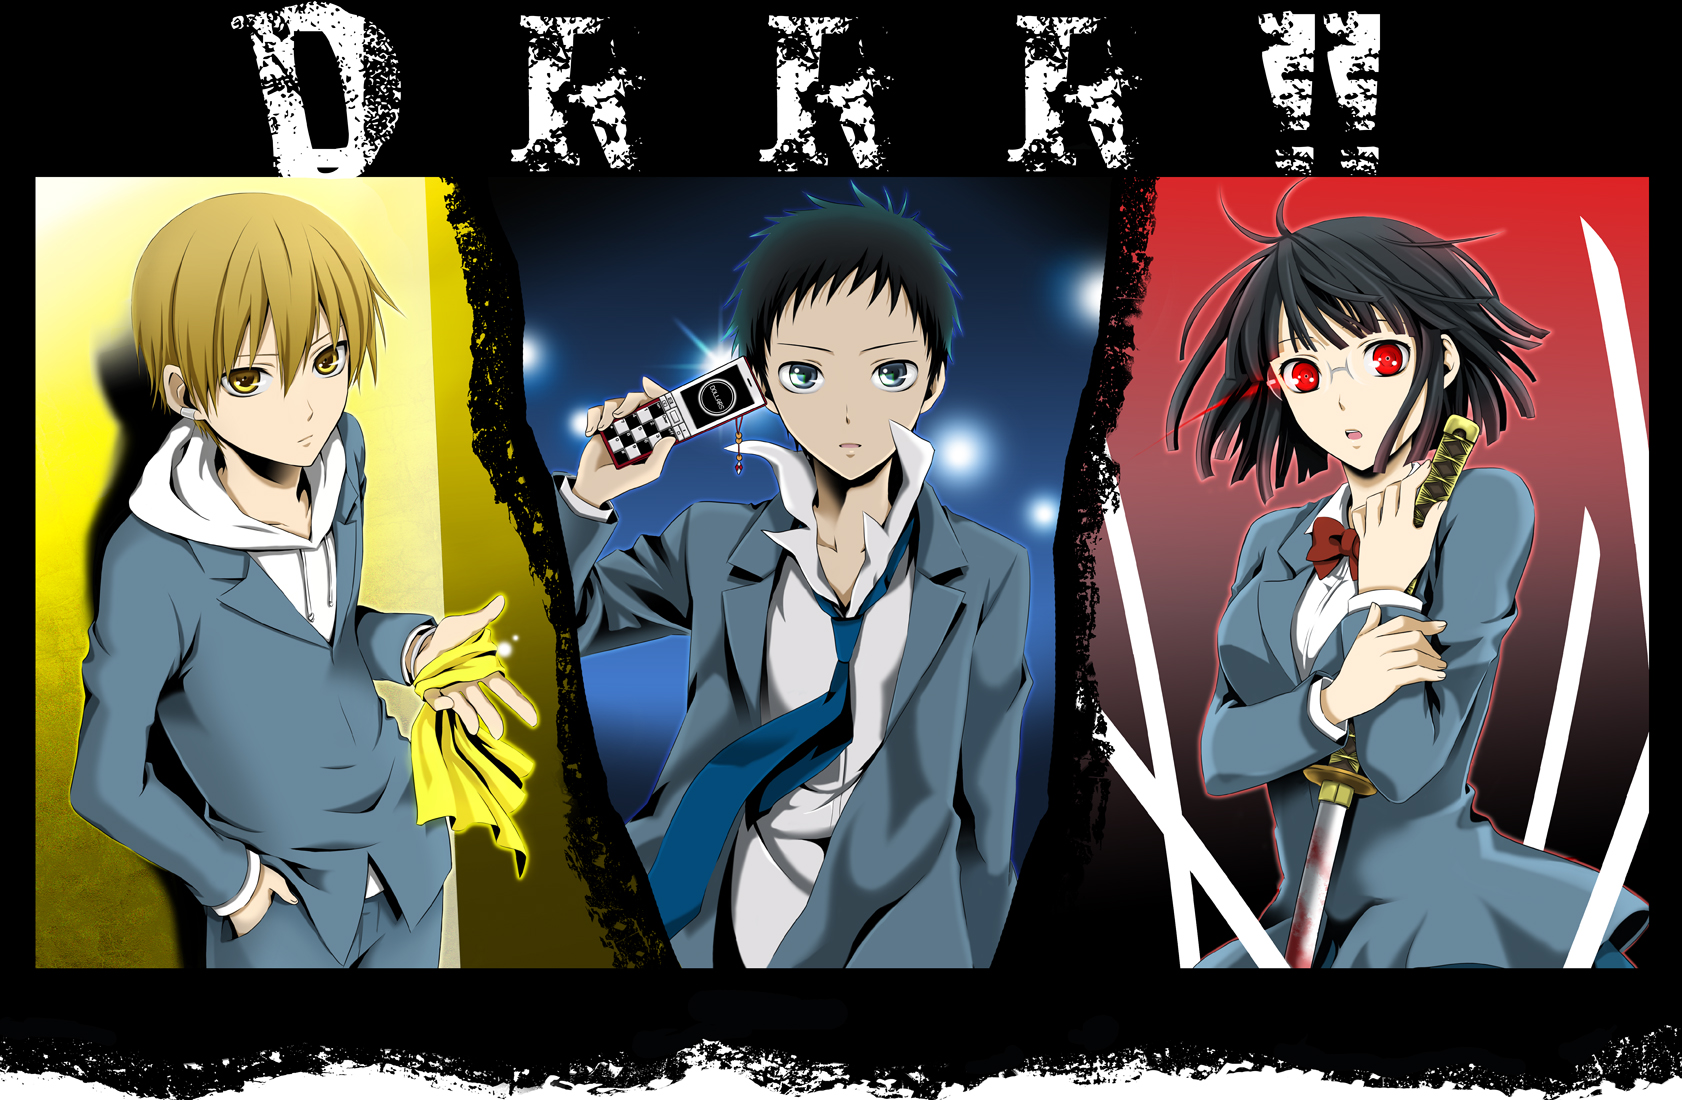 Anime characters Mikado Ryūgamine, Anri Sonohara, and Masaomi Kida from Durarara! standing together.